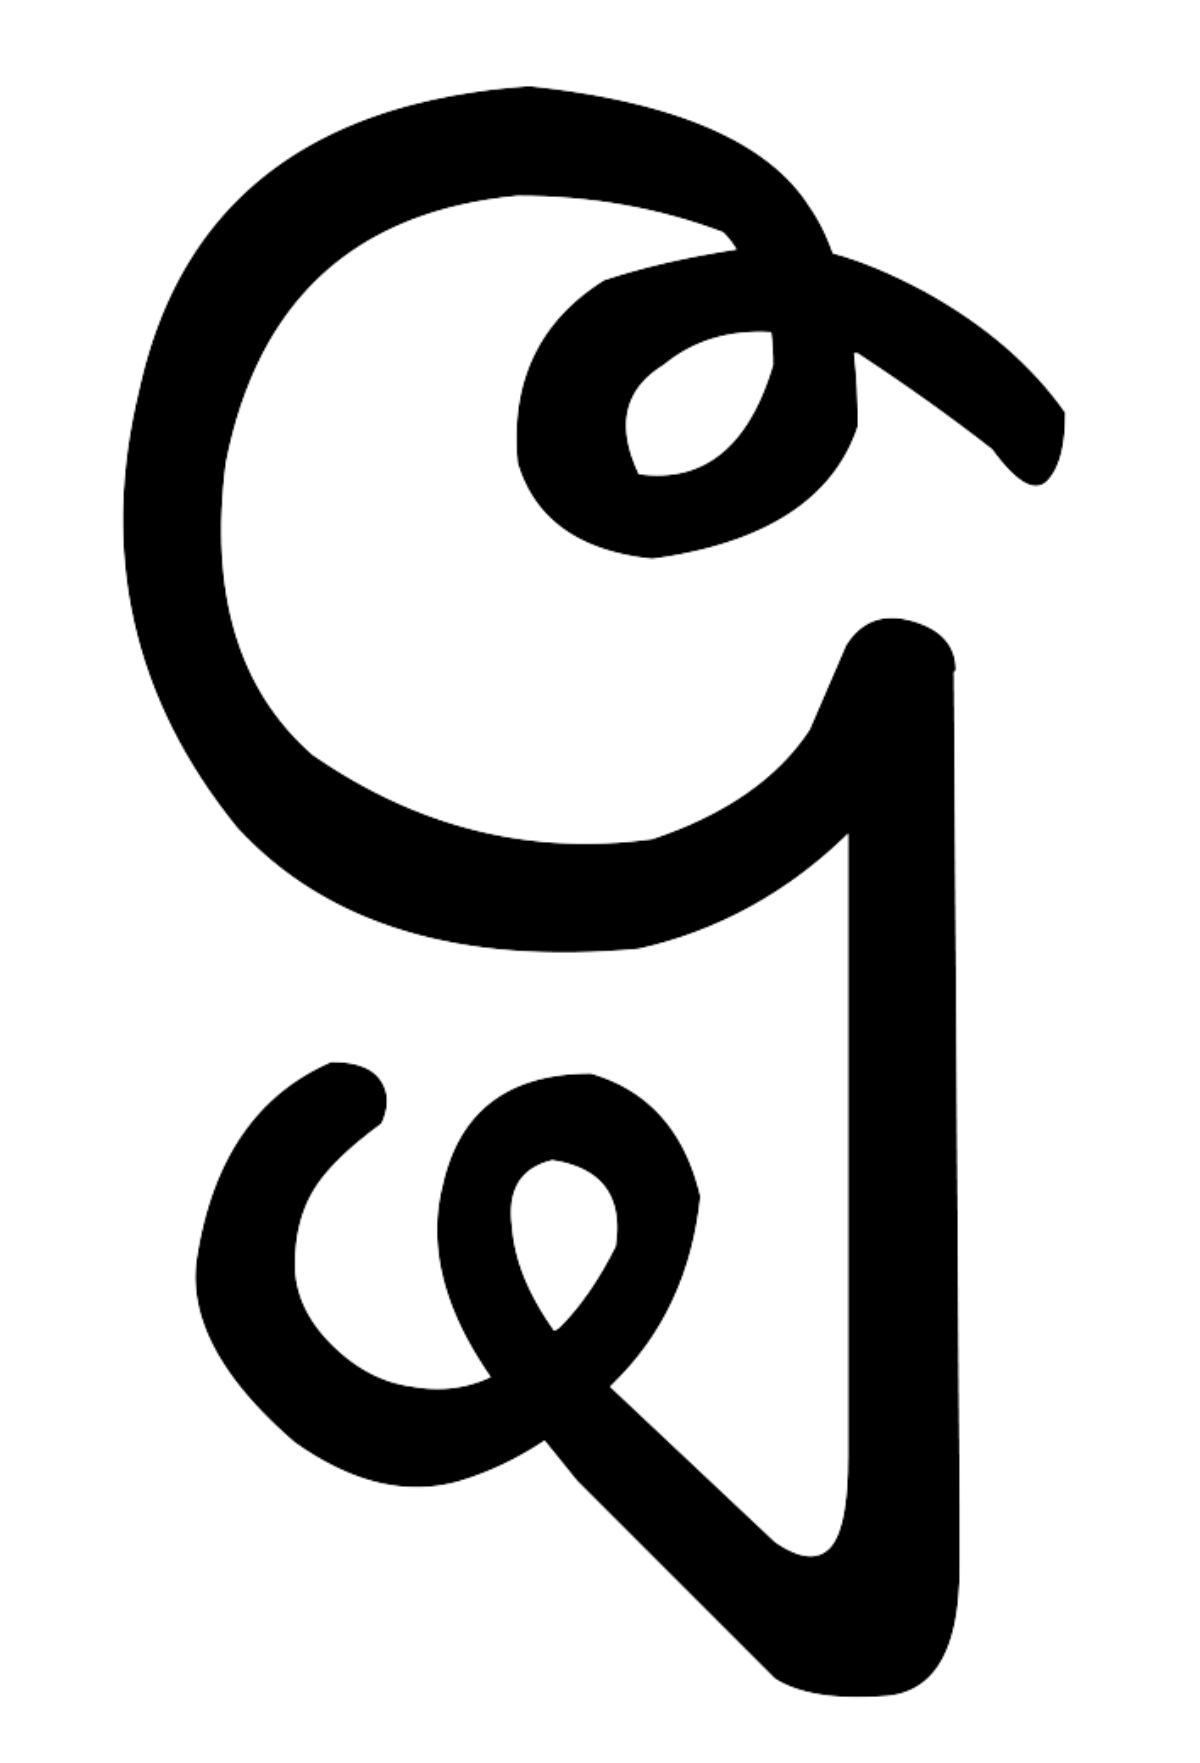 File:Bbe Mon alphabet.gif - Wikimedia Commons